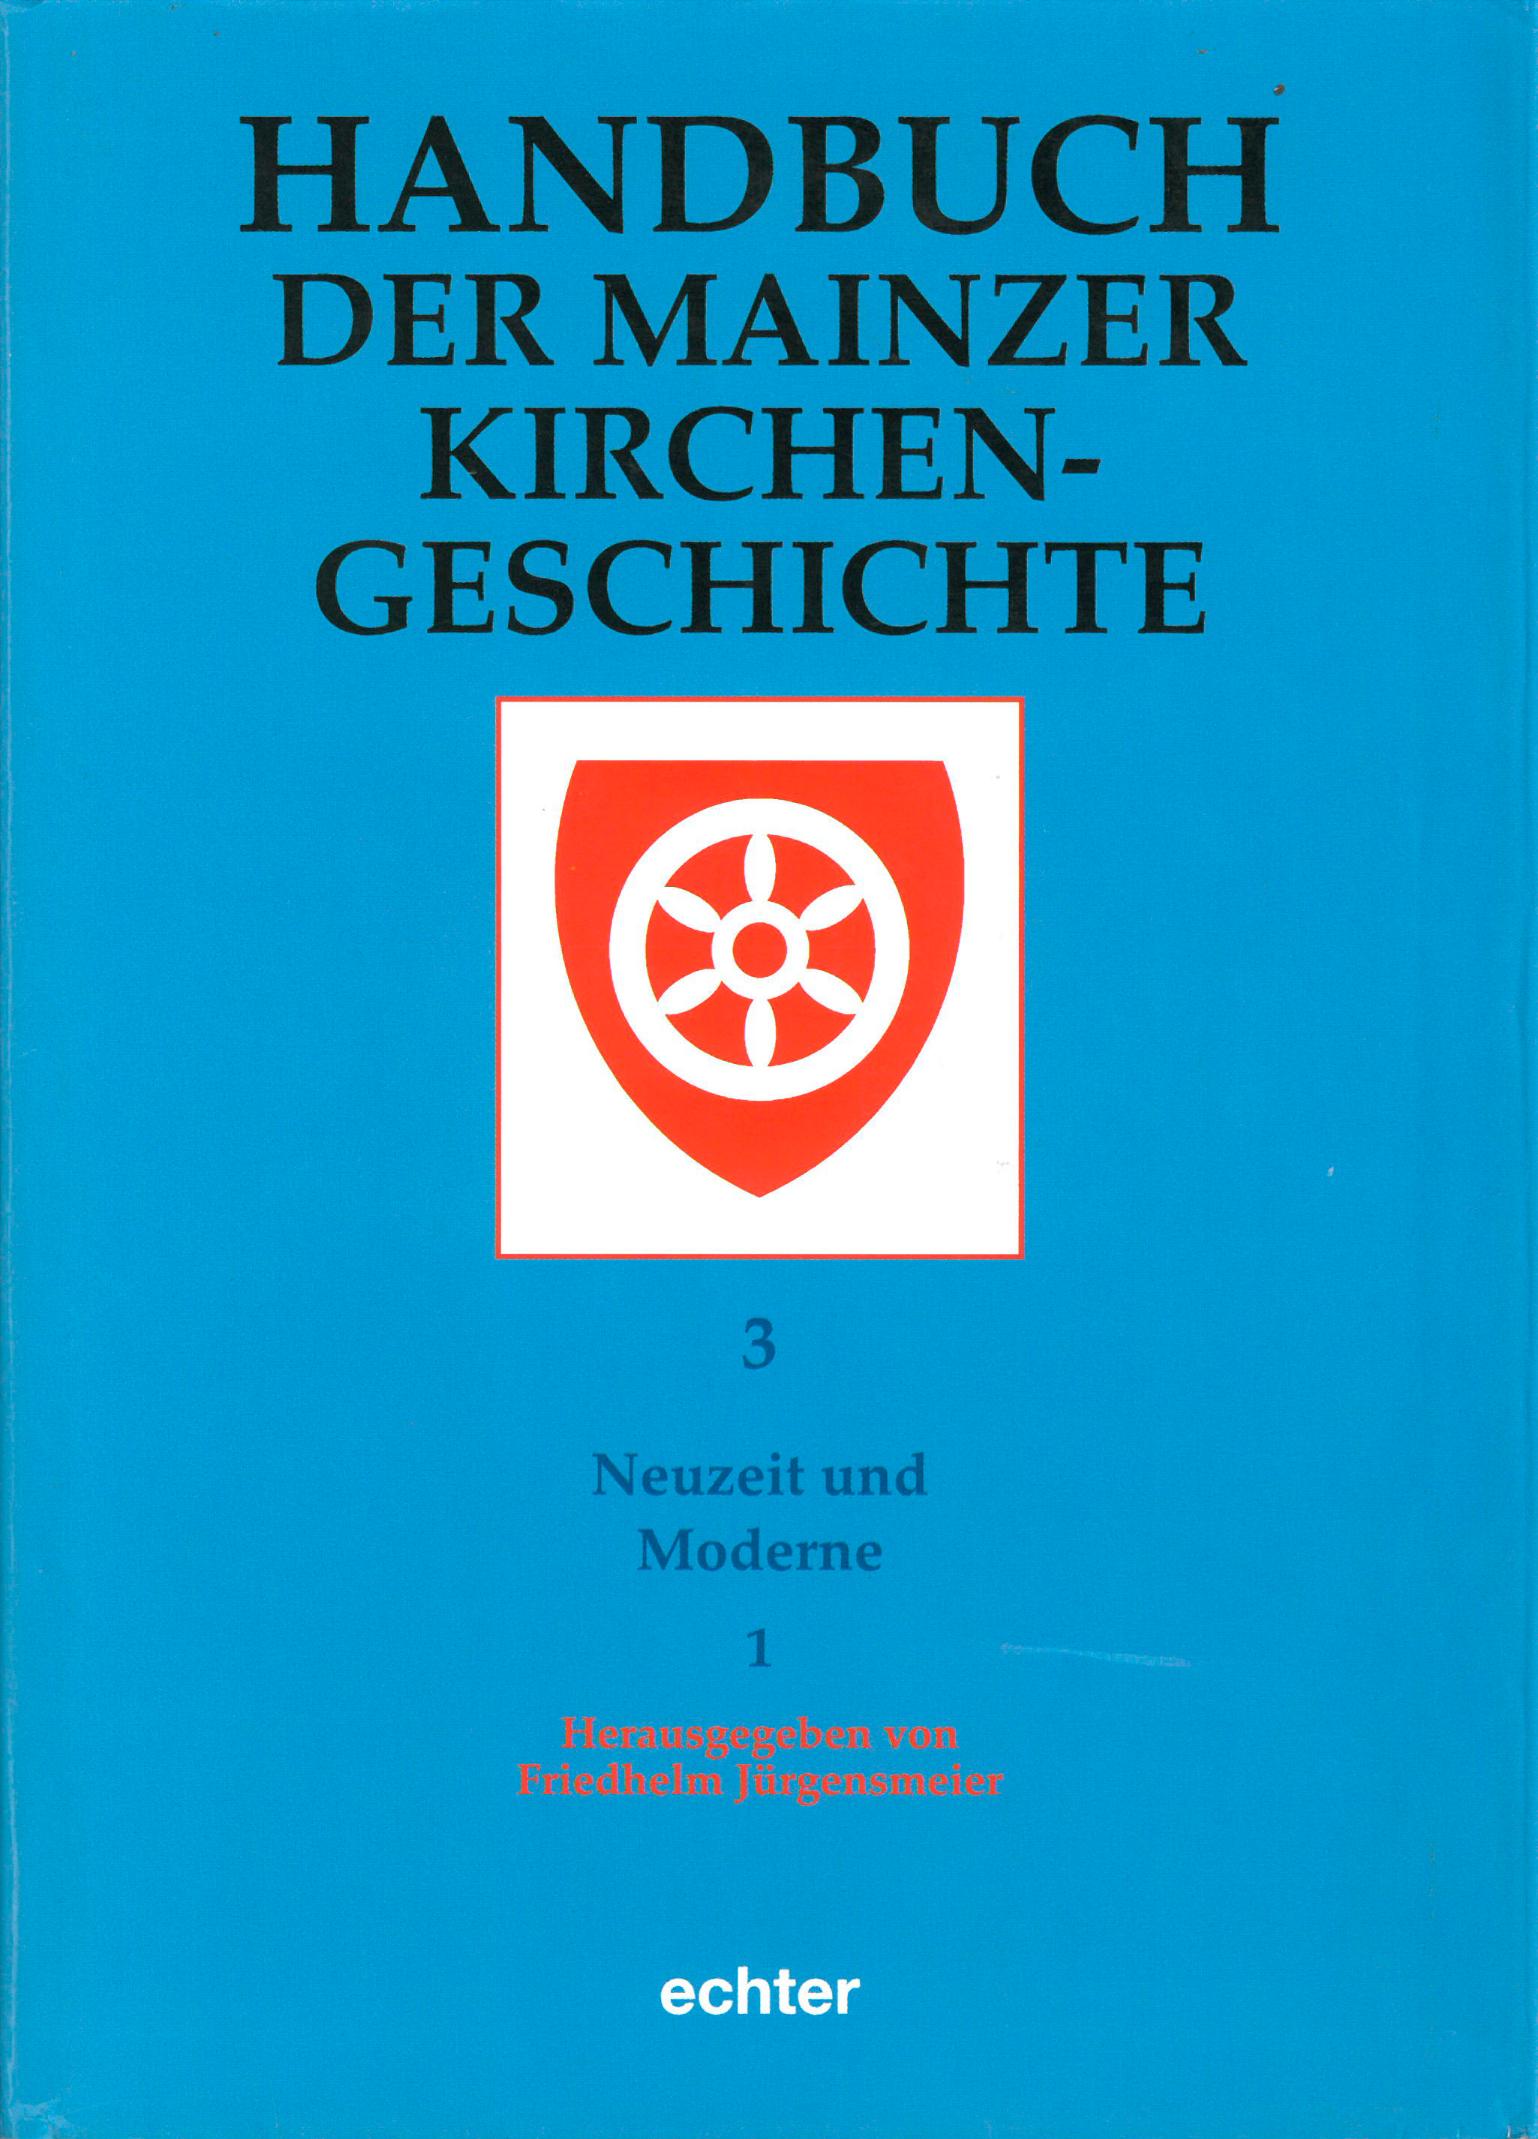 Handbuch III (c) Echter / IMKG